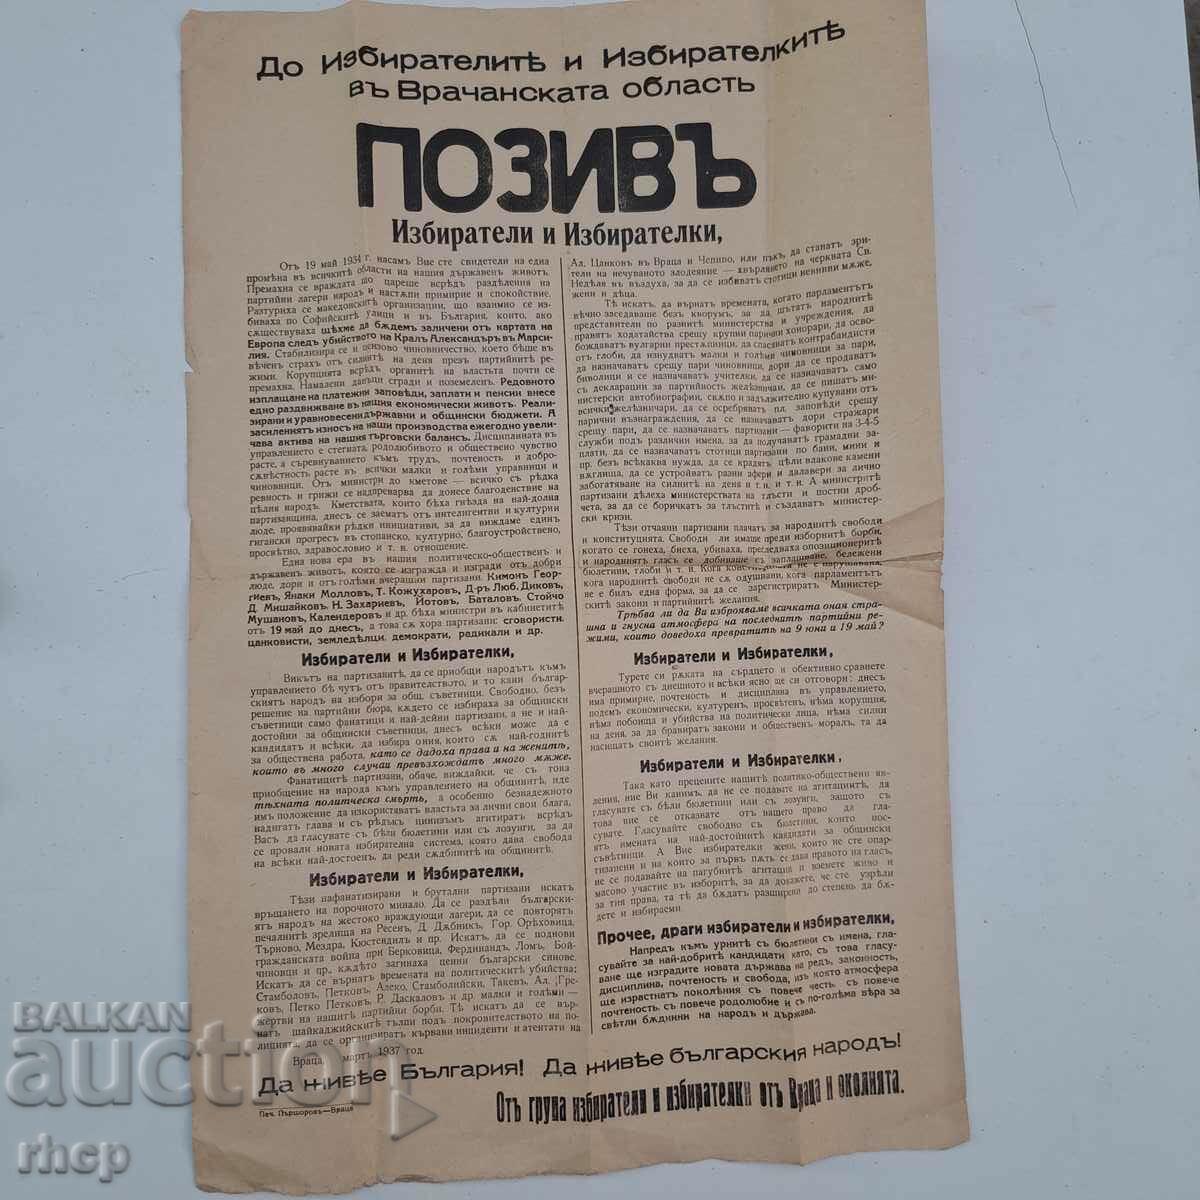 Call for elections 1937 Vratsa